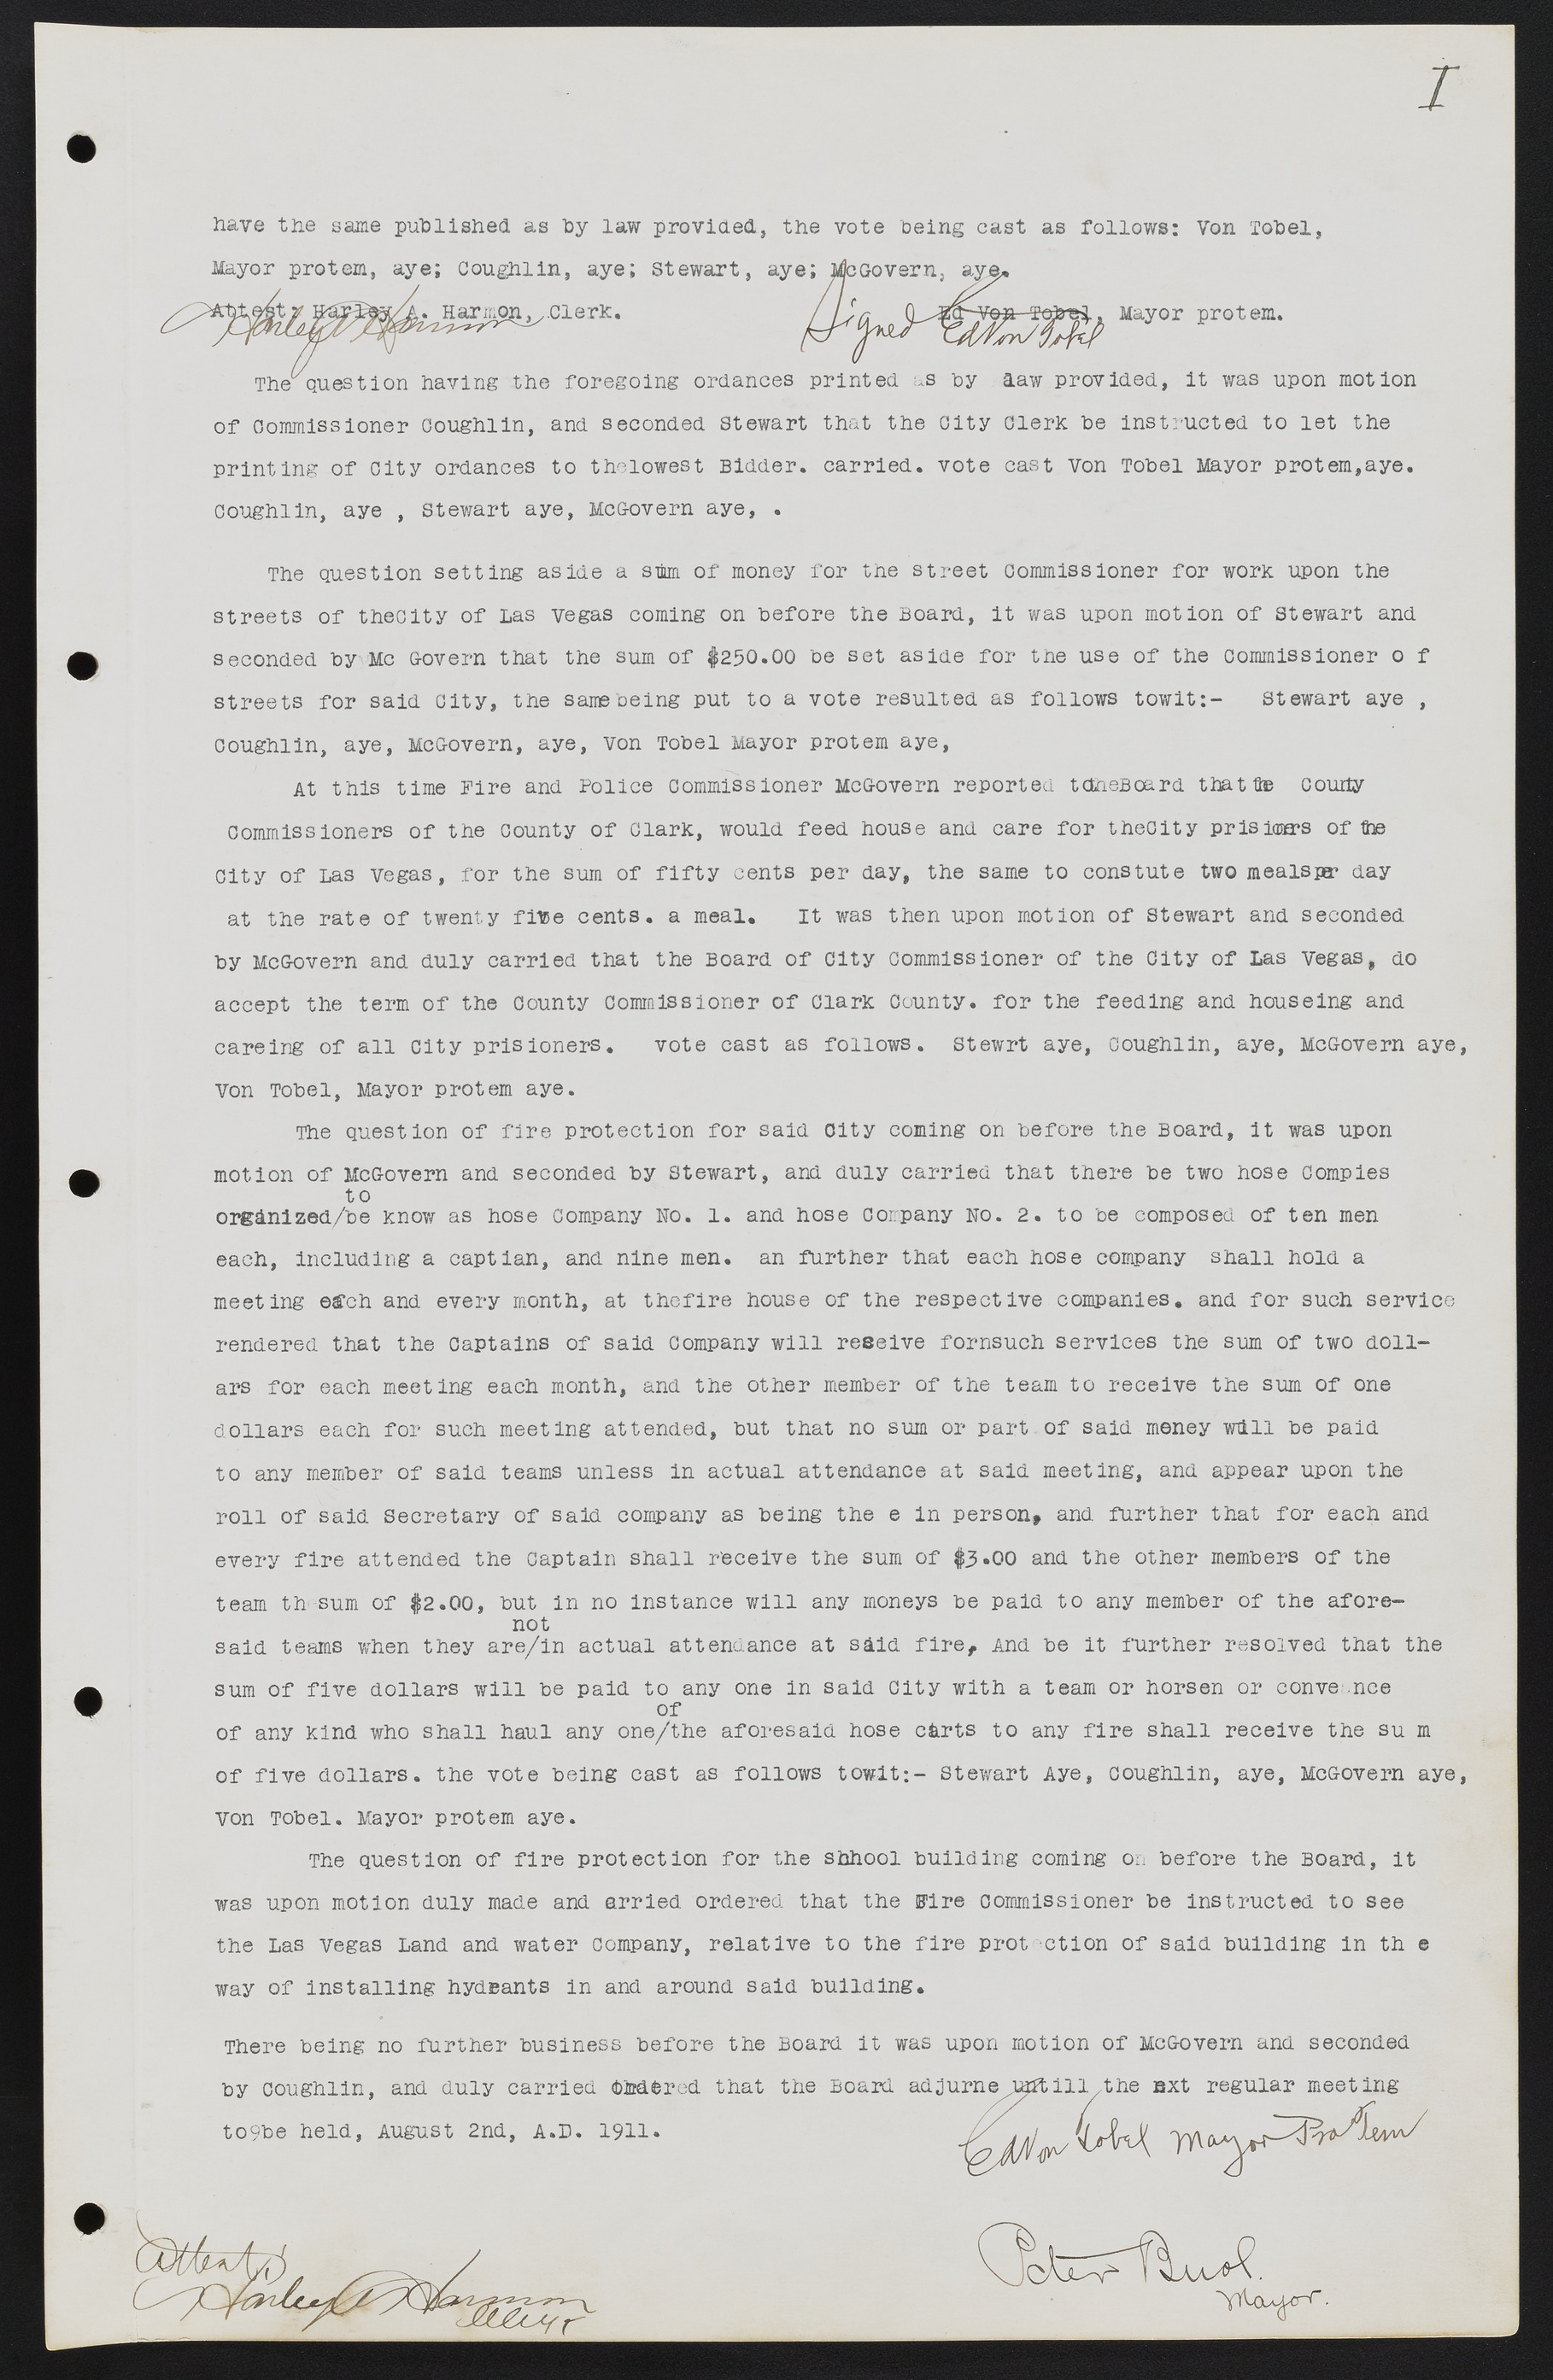 Las Vegas City Commission Minutes, June 22, 1911 to February 7, 1922, lvc000001-11